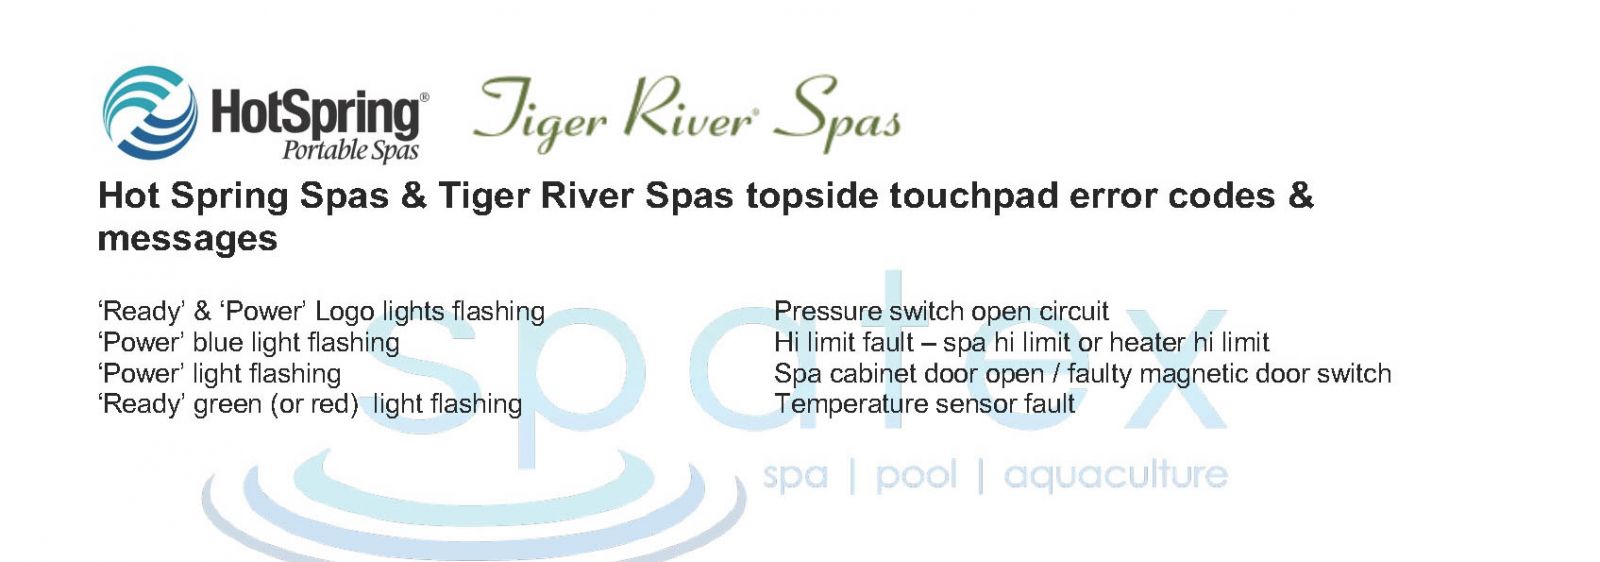 Hotspring Spas Tiger River Spas topside touchpad error code